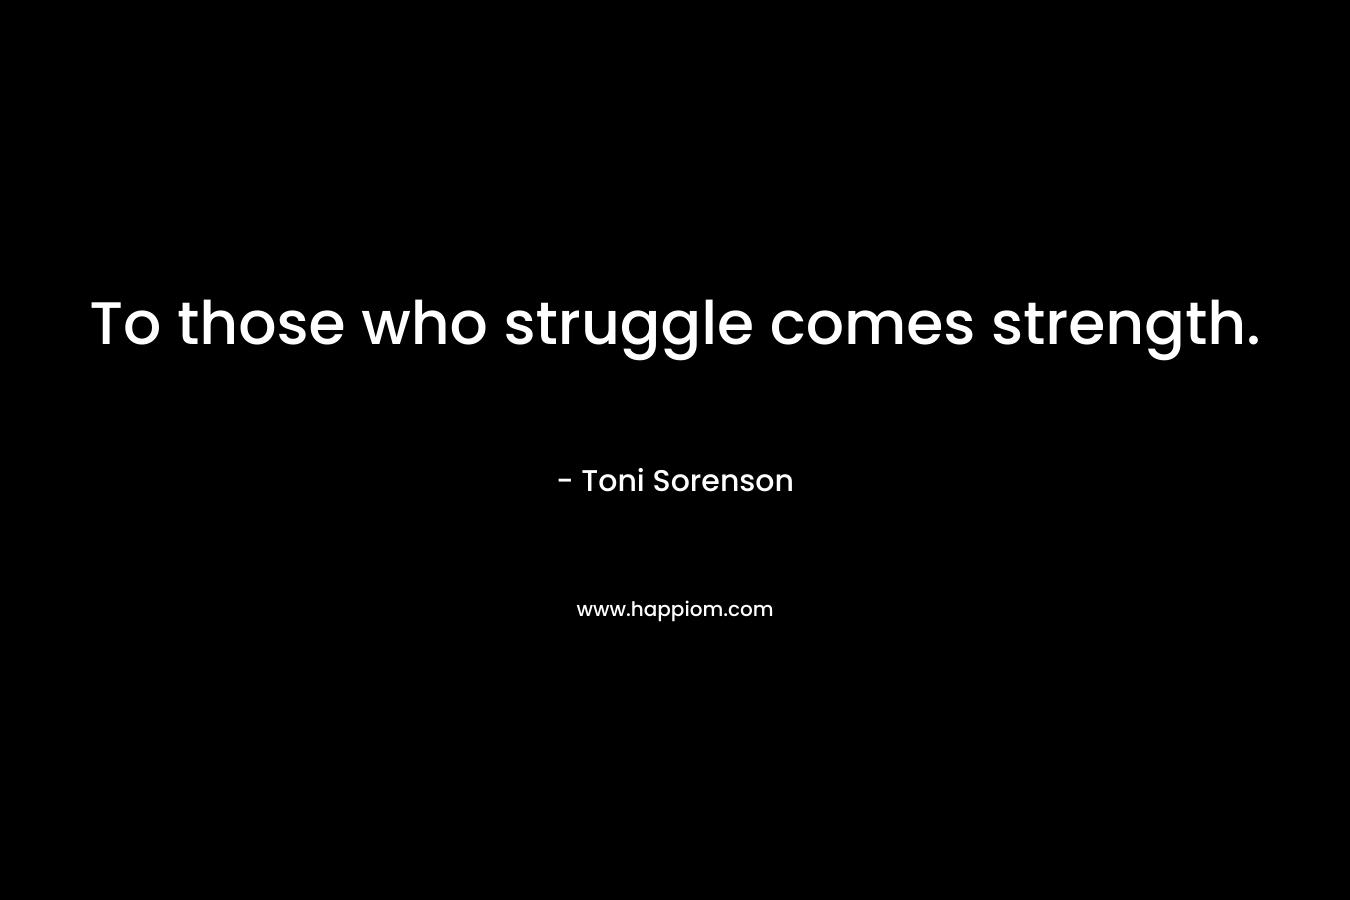 To those who struggle comes strength.